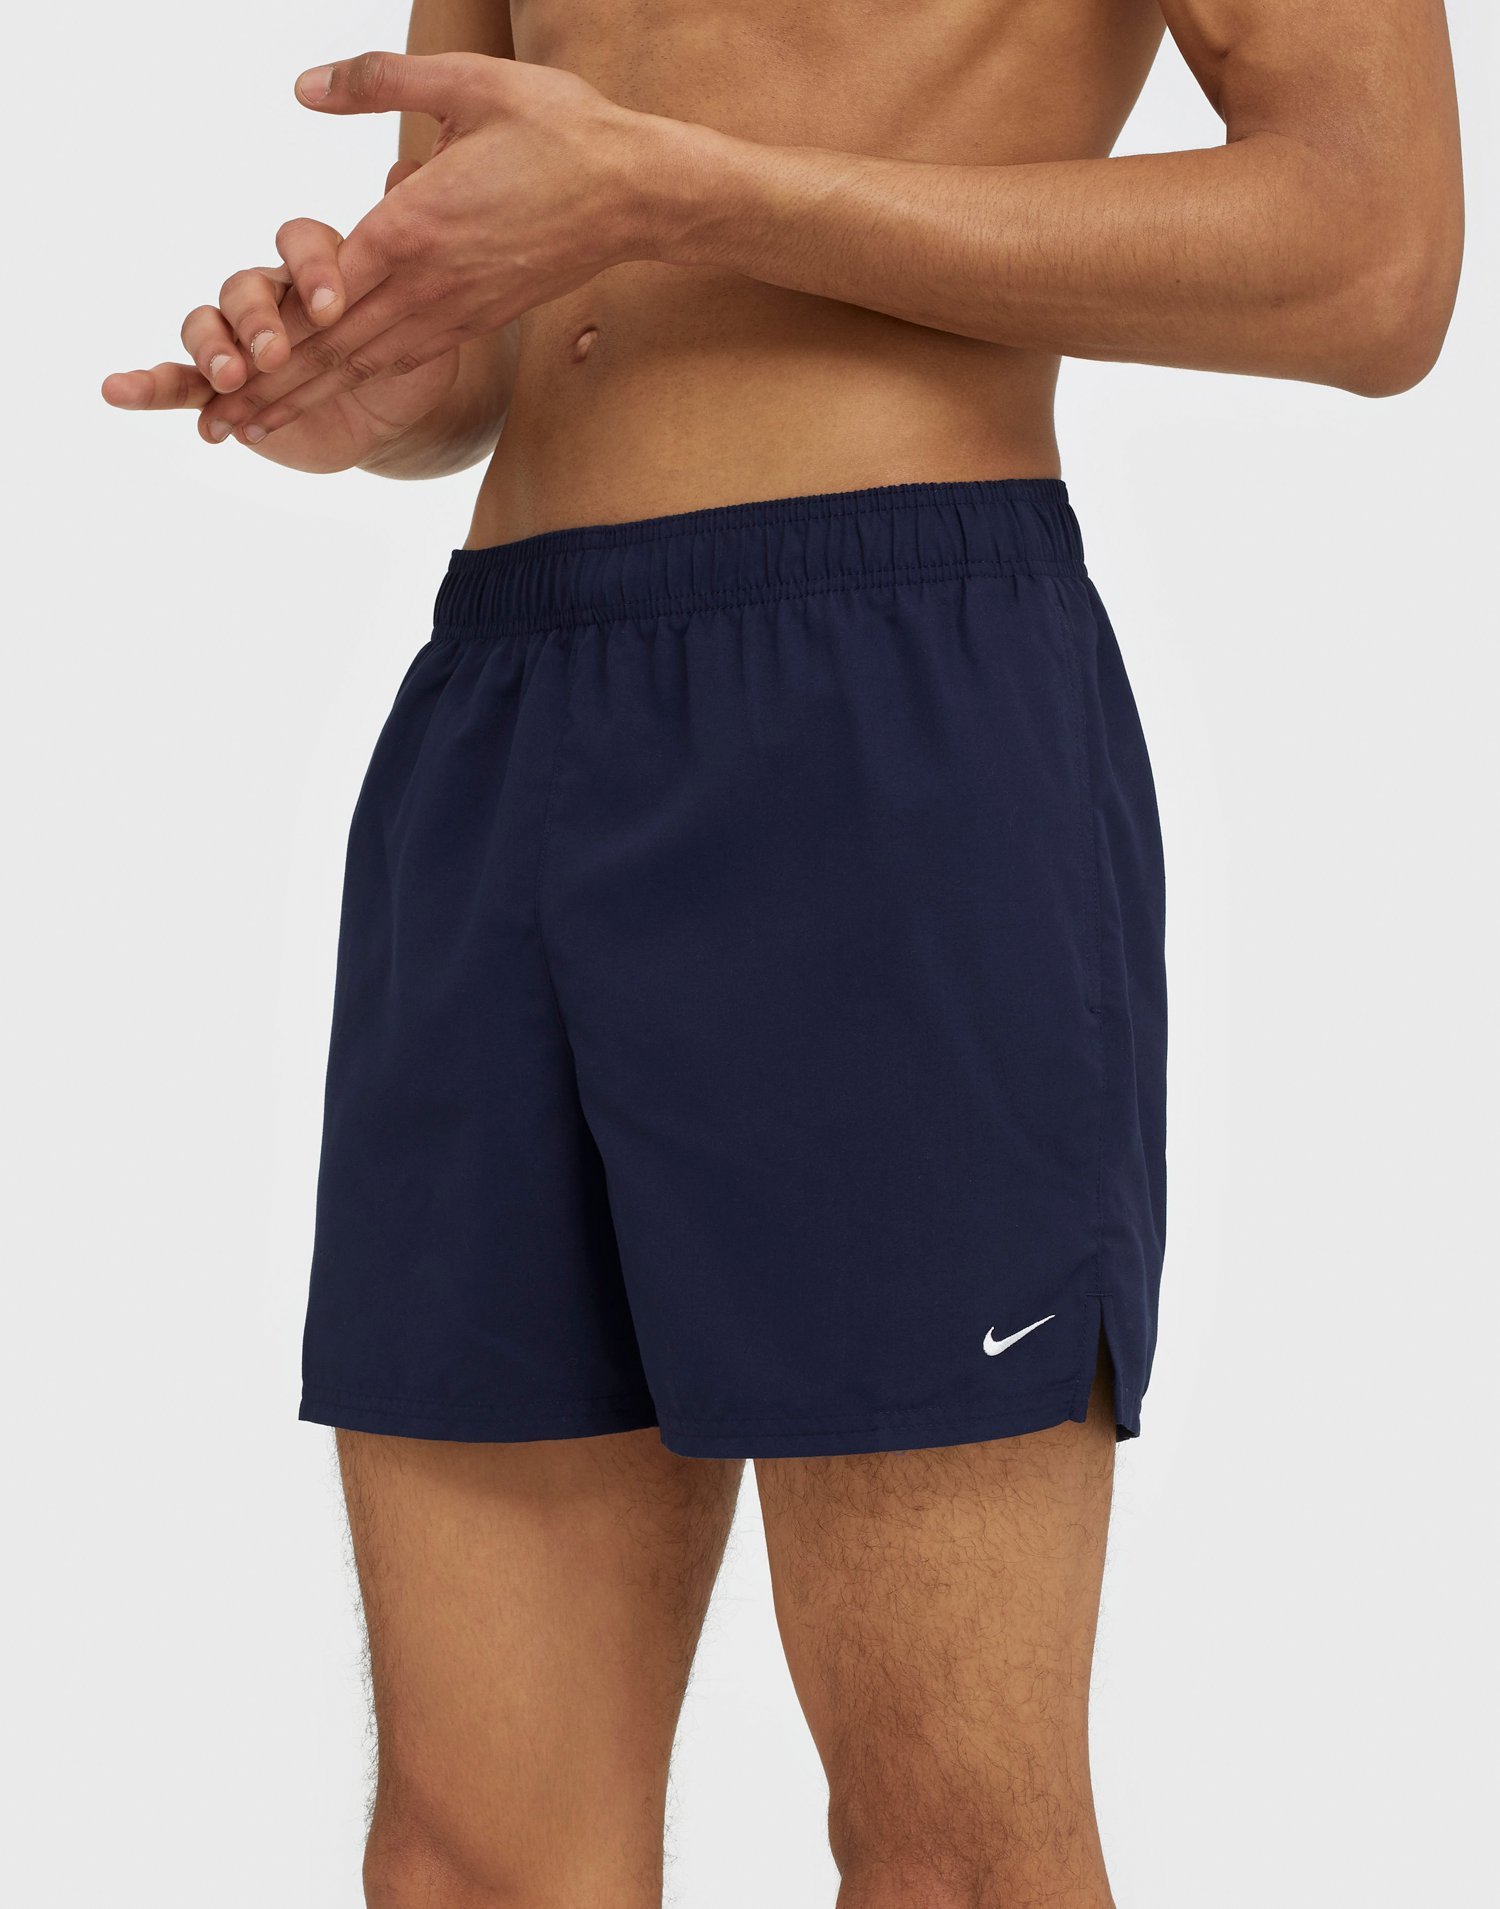 volley shorts nike